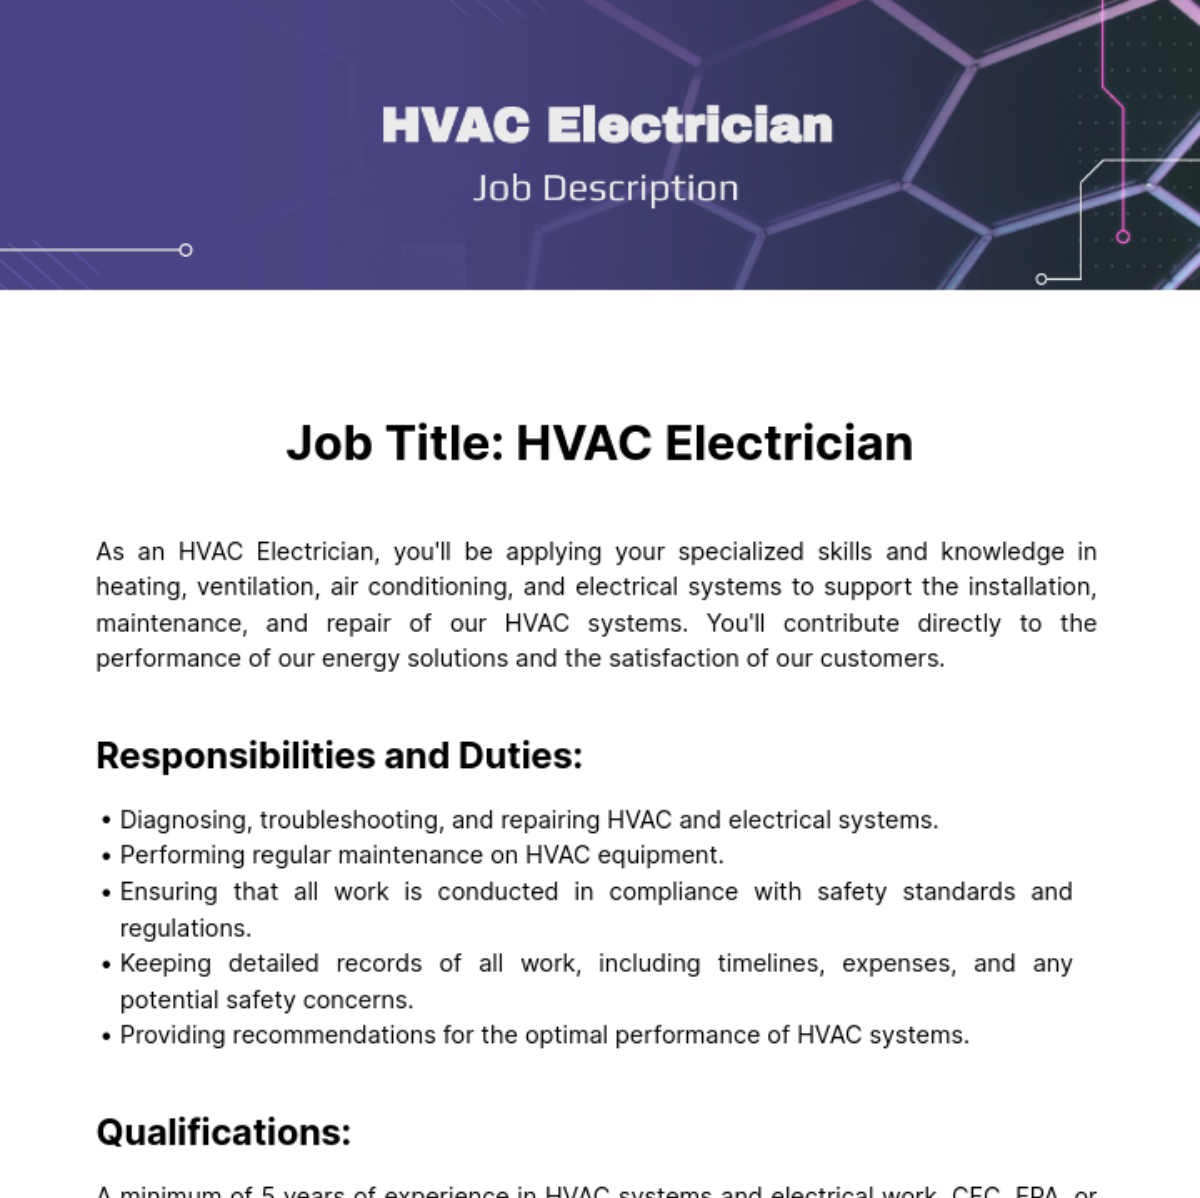 HVAC Electrician Job Description Template